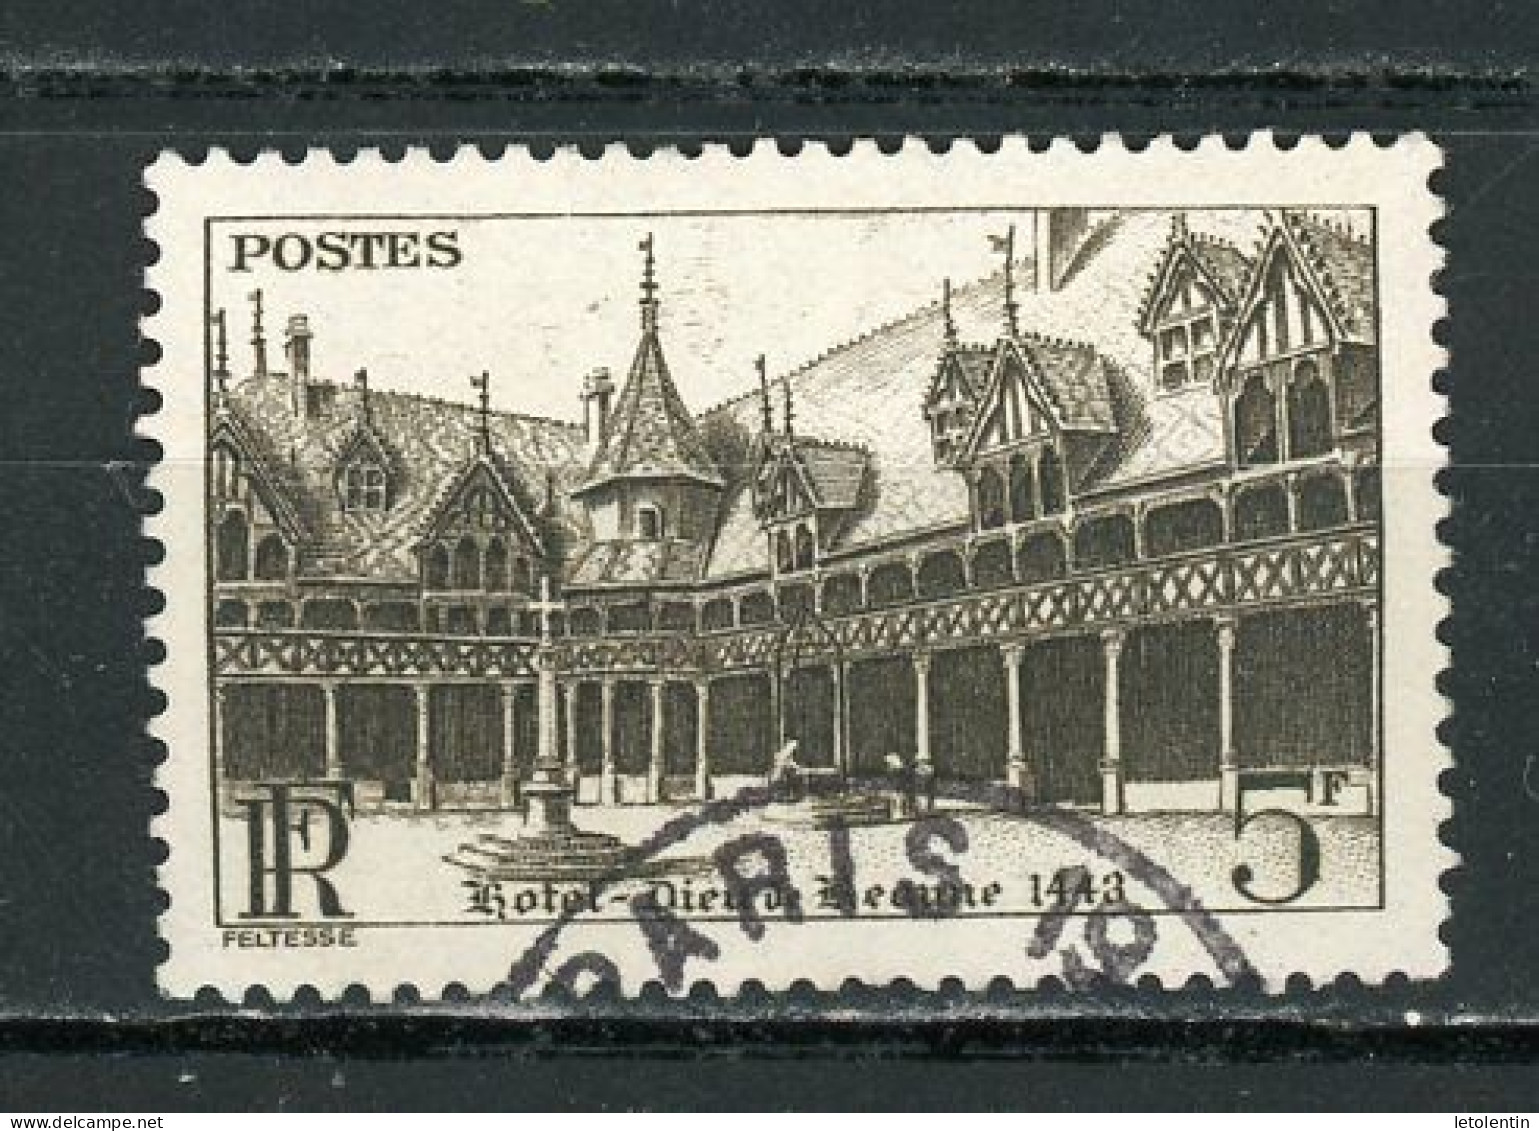 FRANCE - BEAUNE - N° Yvert 499 Obli Ronde de “PARIS” - Used Stamps